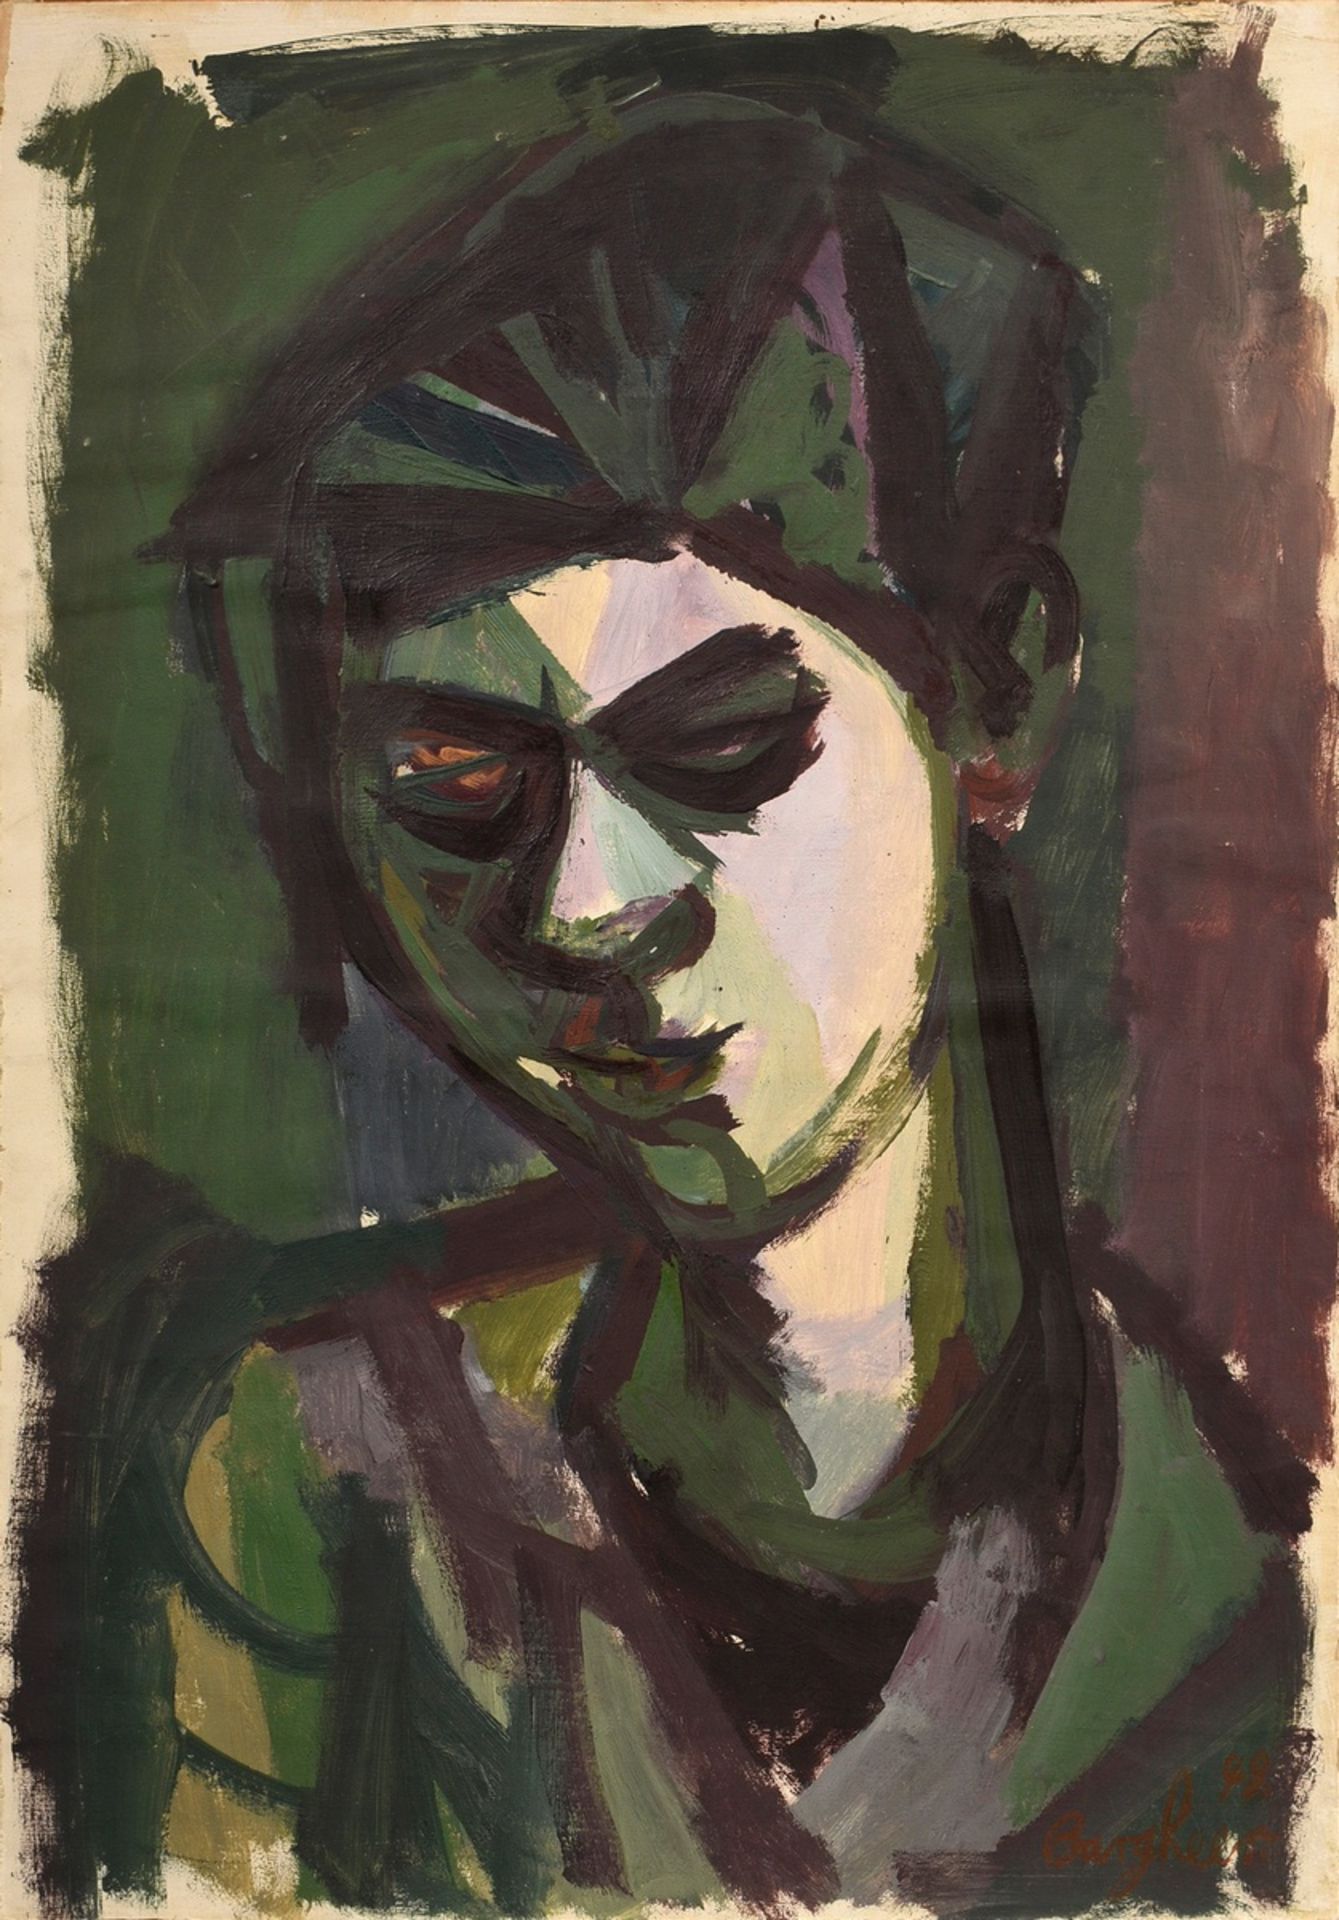 Bargheer, Eduard (1901-1979) "Portrait" 1948, Öl/Papier, auf Faserplatte kaschiert, u.r. sign./dat.